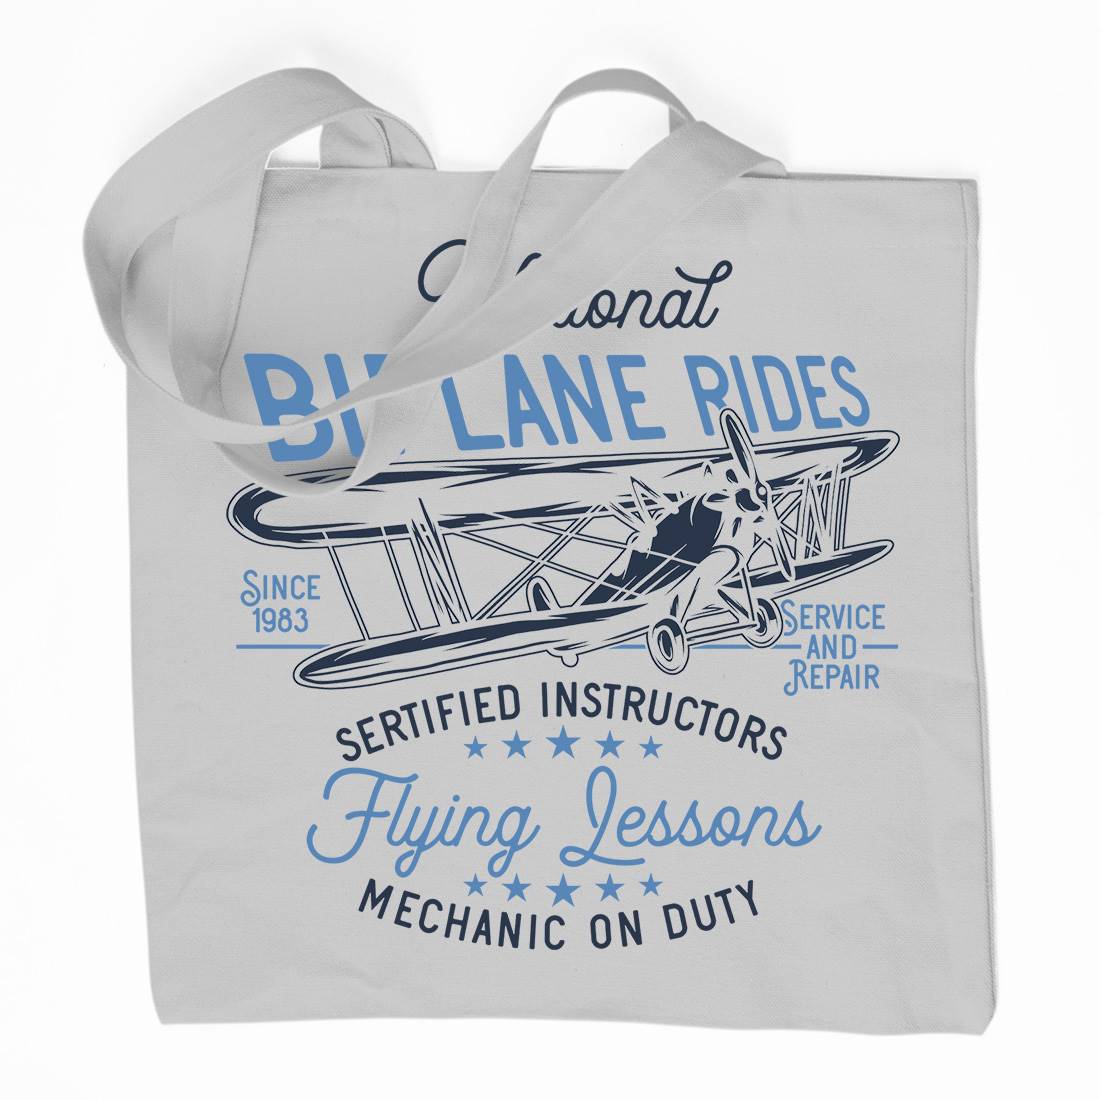 Biplane Rides Organic Premium Cotton Tote Bag Vehicles D910